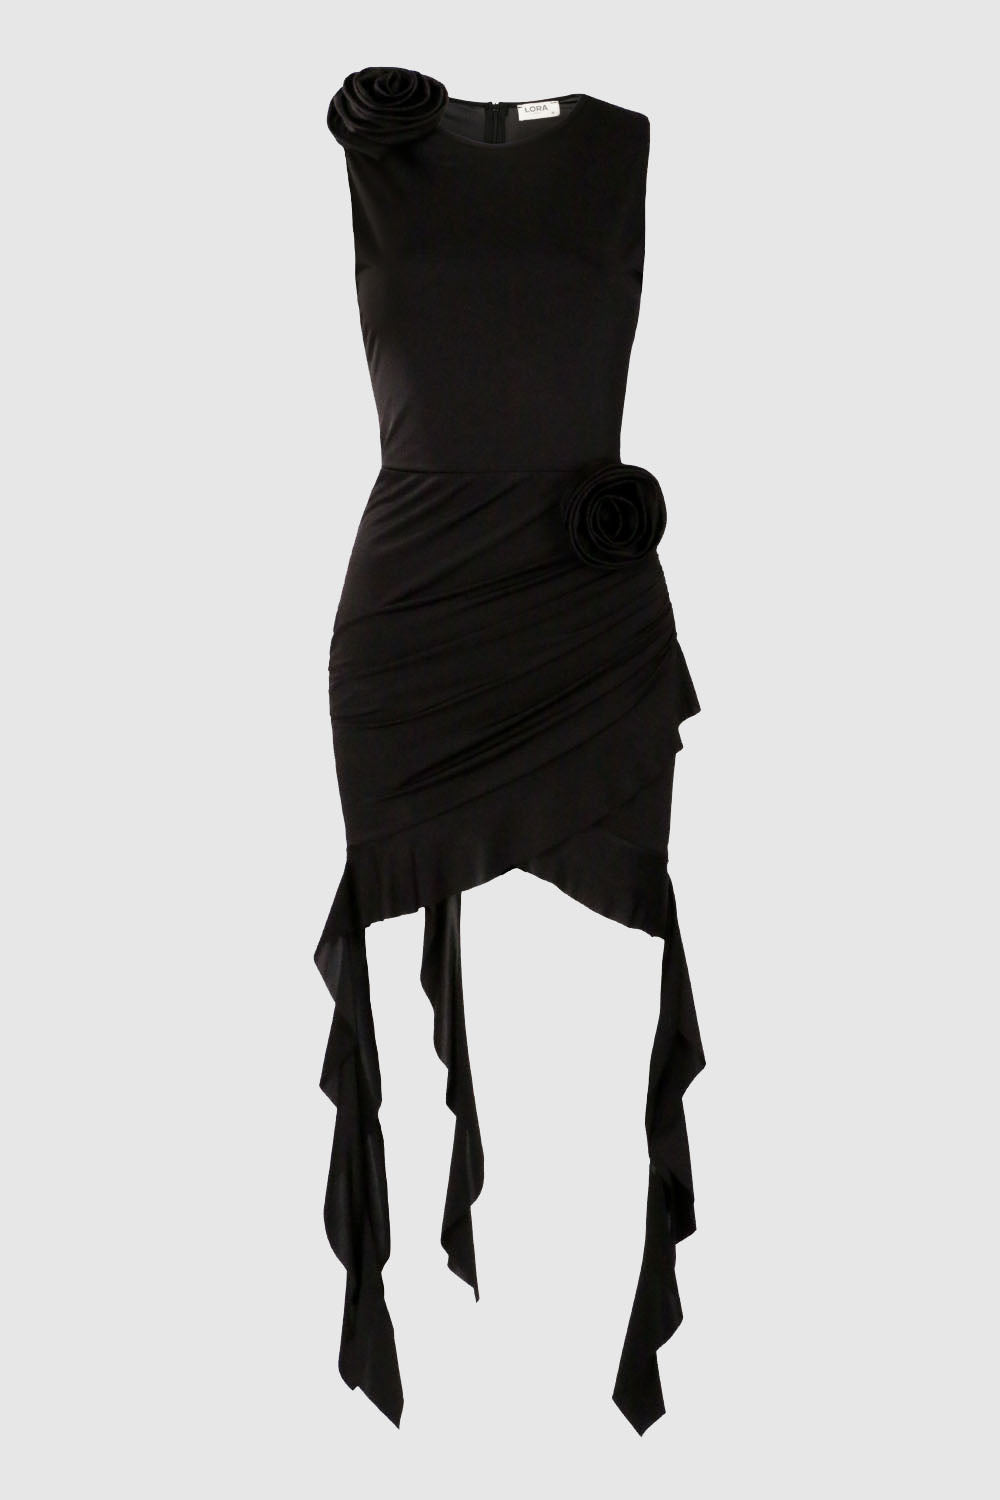 Shelley Siyah Mini Elbise